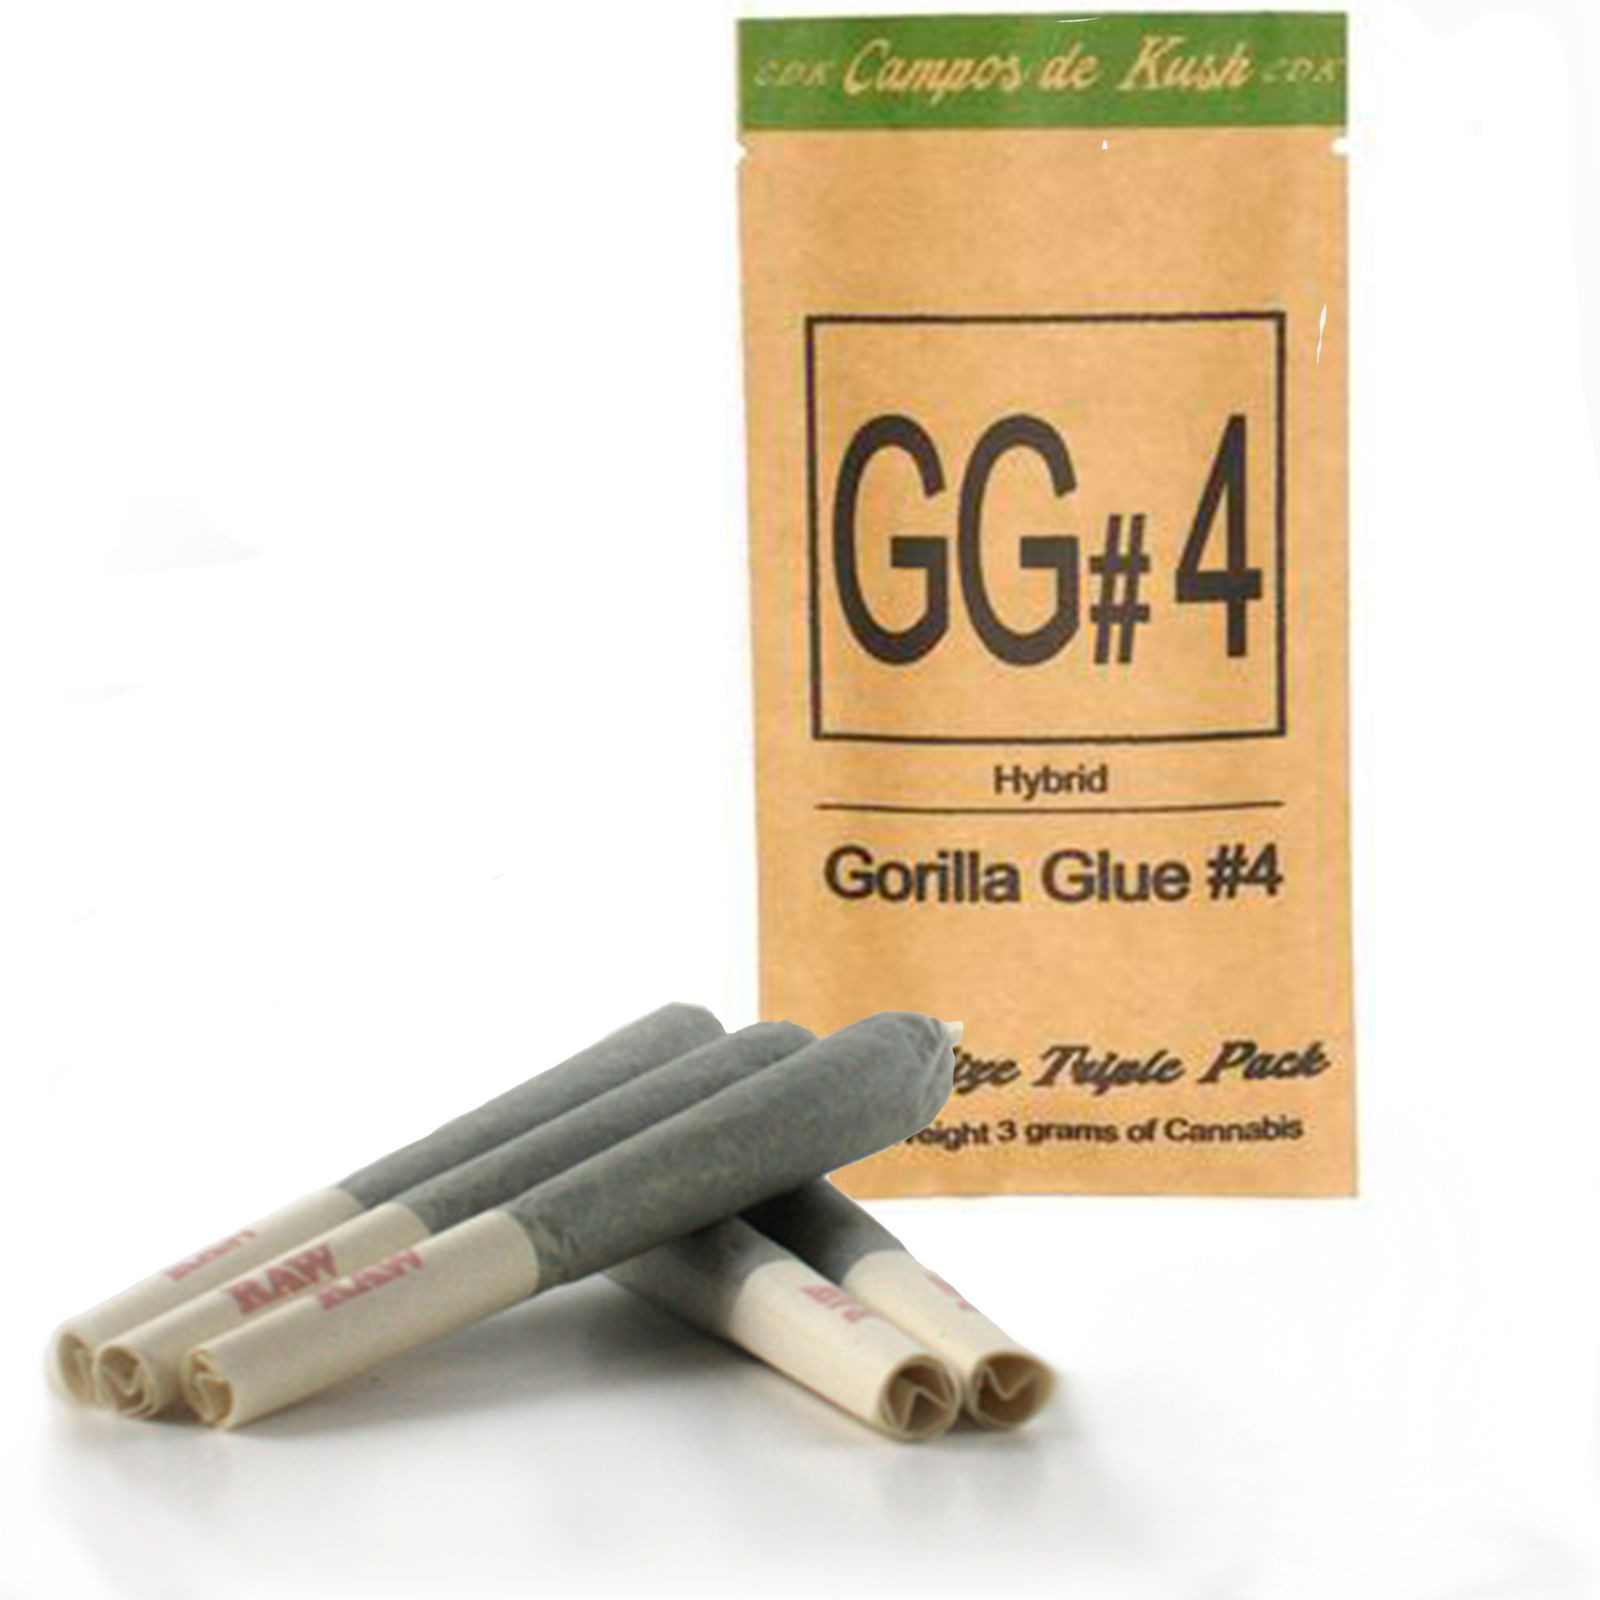 gorilla glue 4 strain leafly